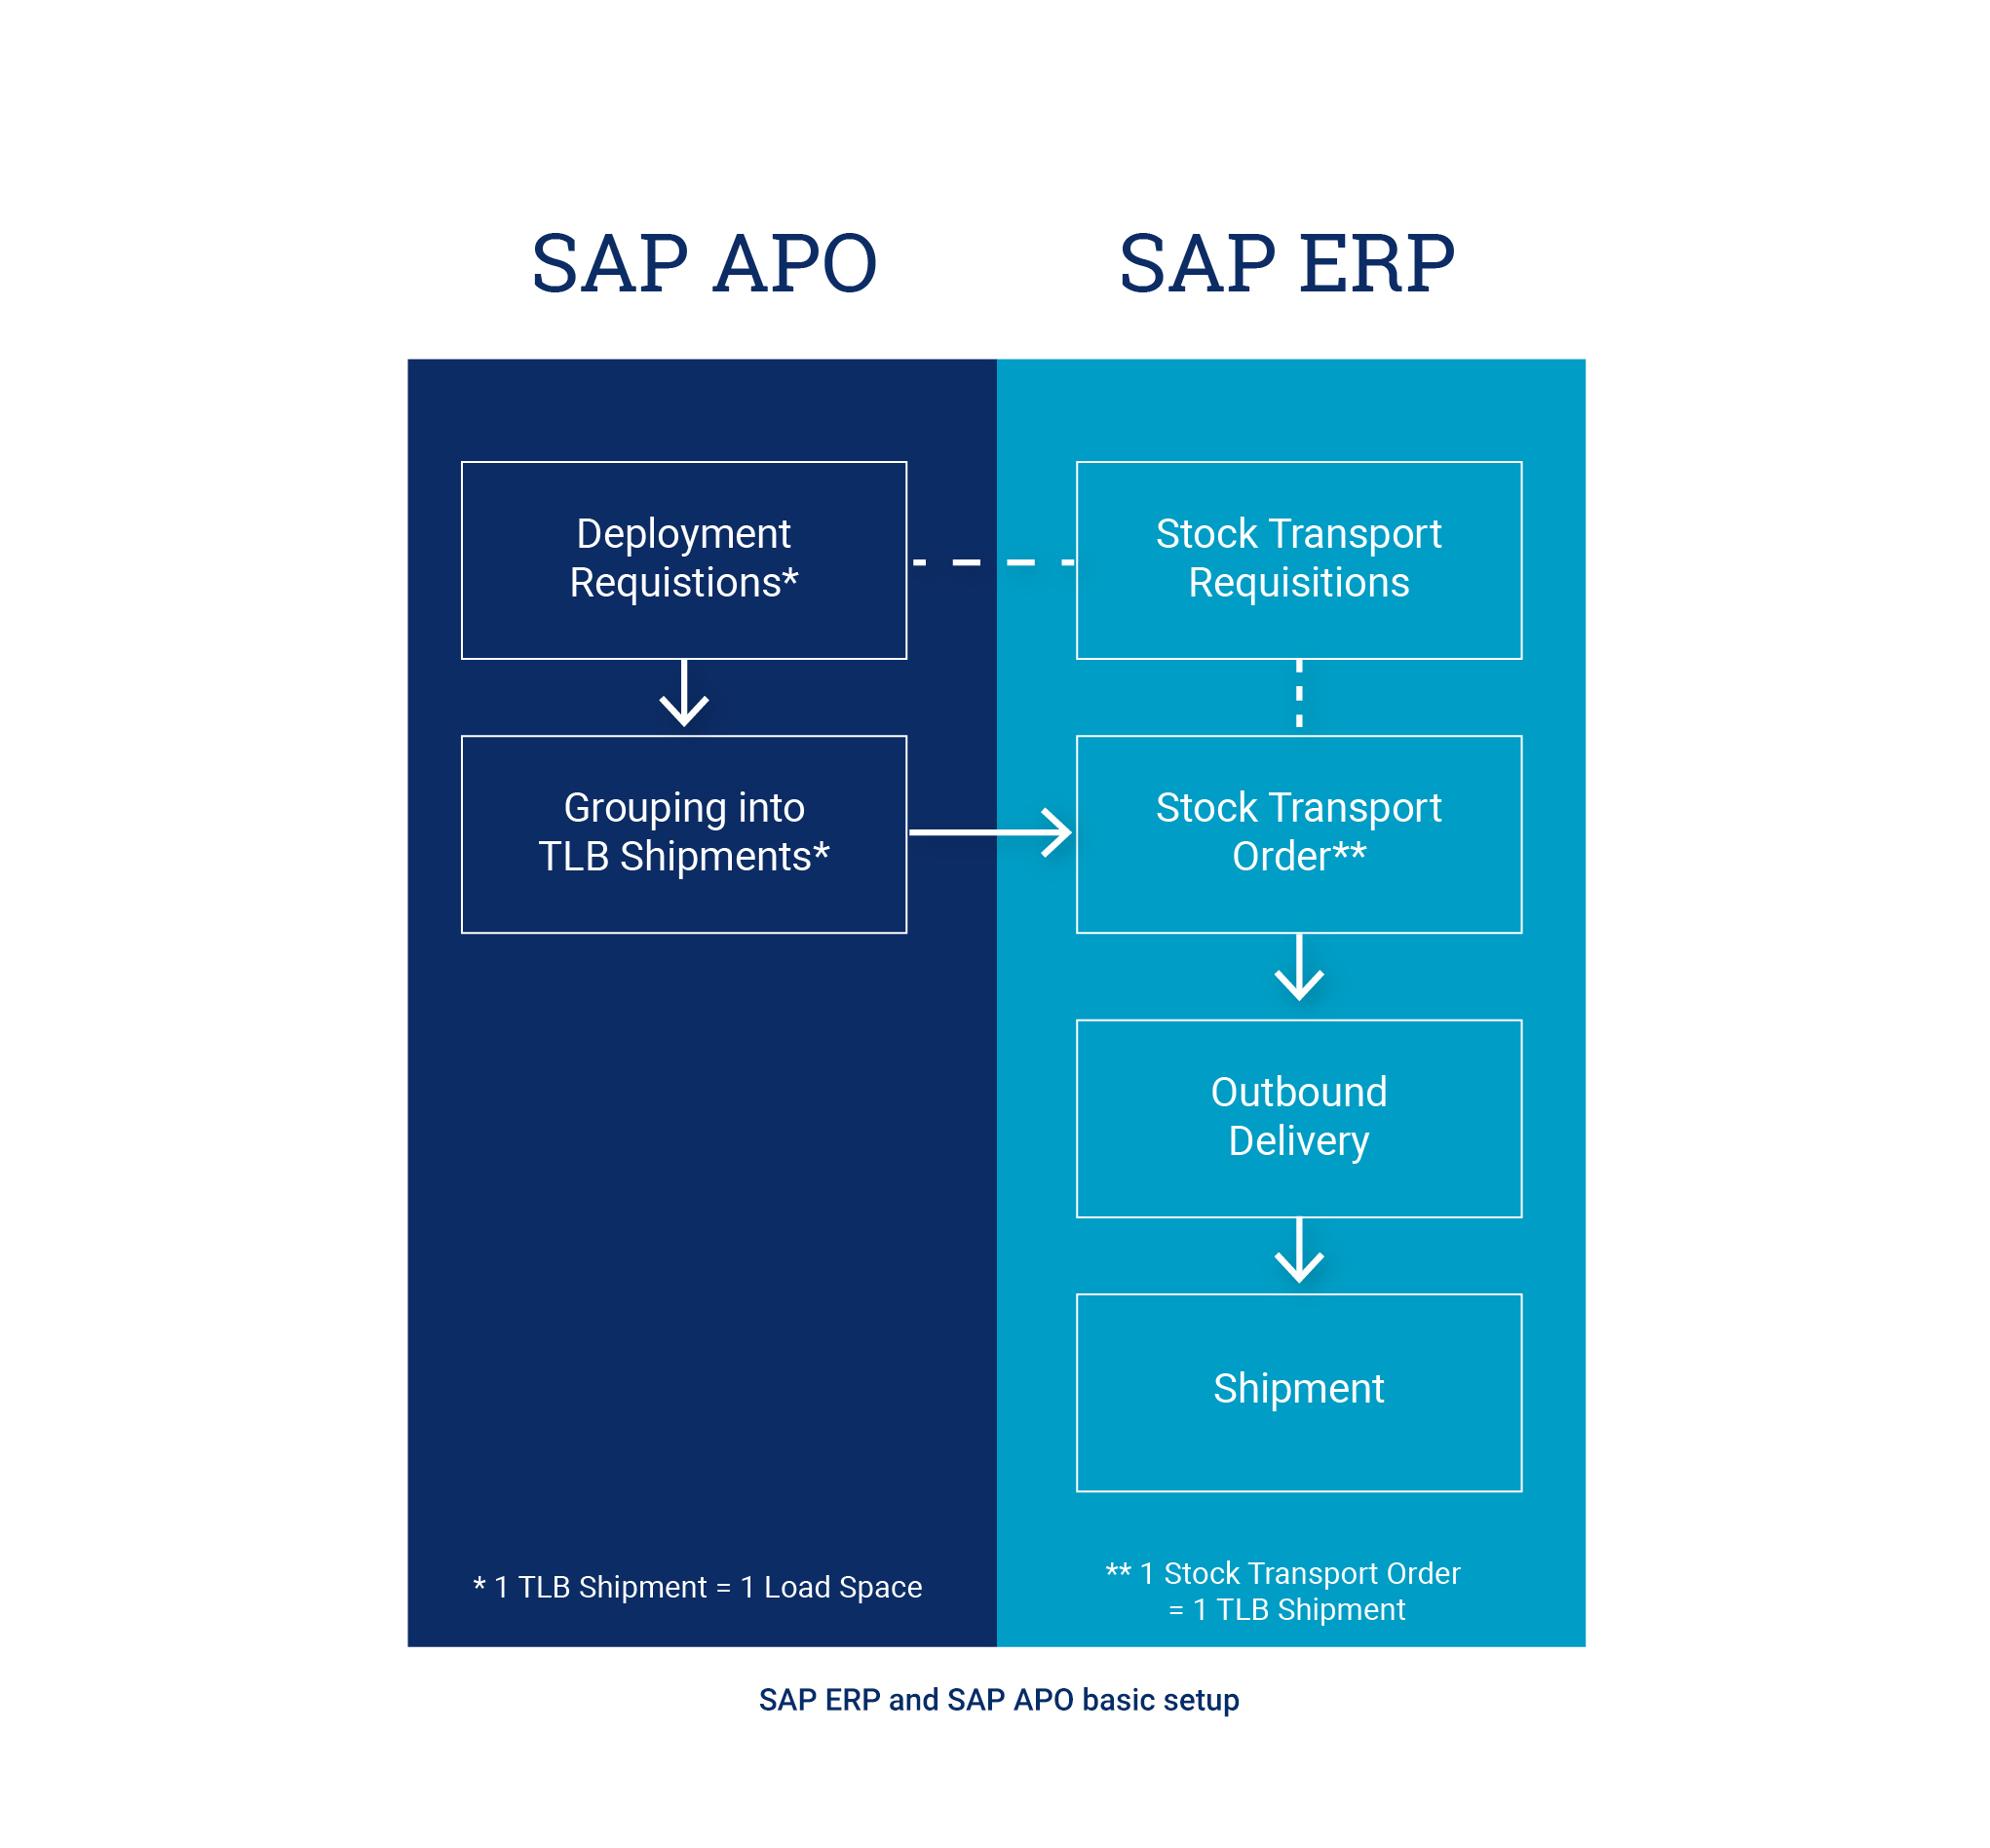 SAP ERP and SAP APO basic setup